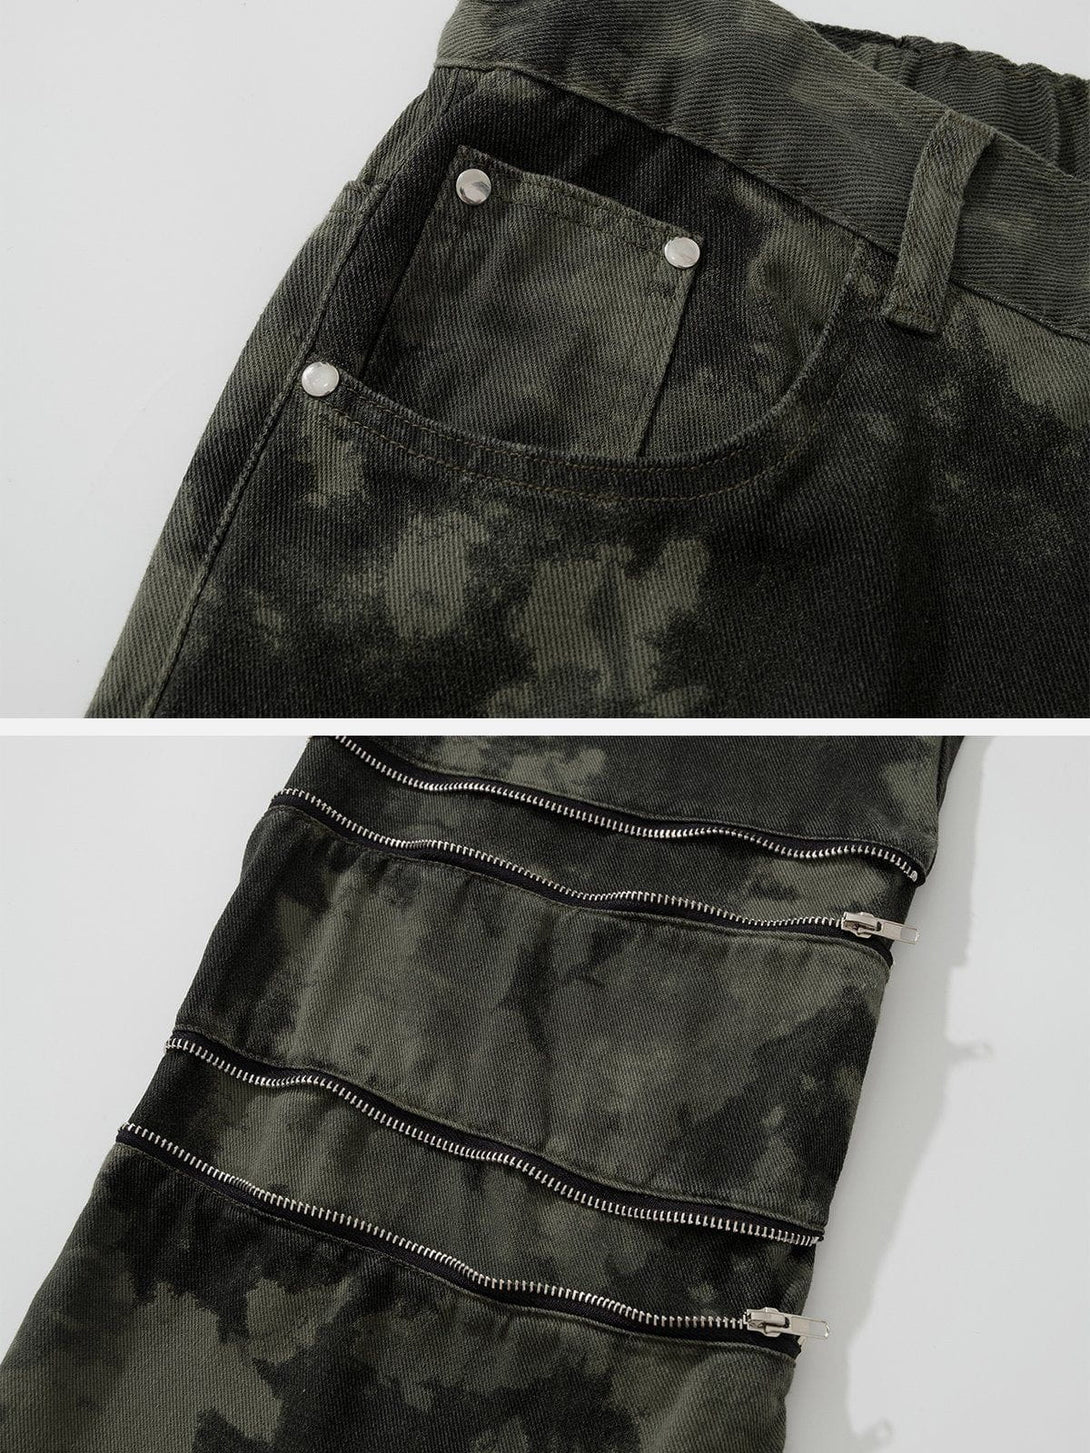 Majesda® - Functional Multi-pocket Zipper Design Camouflage Cargo Pants outfit ideas streetwear fashion